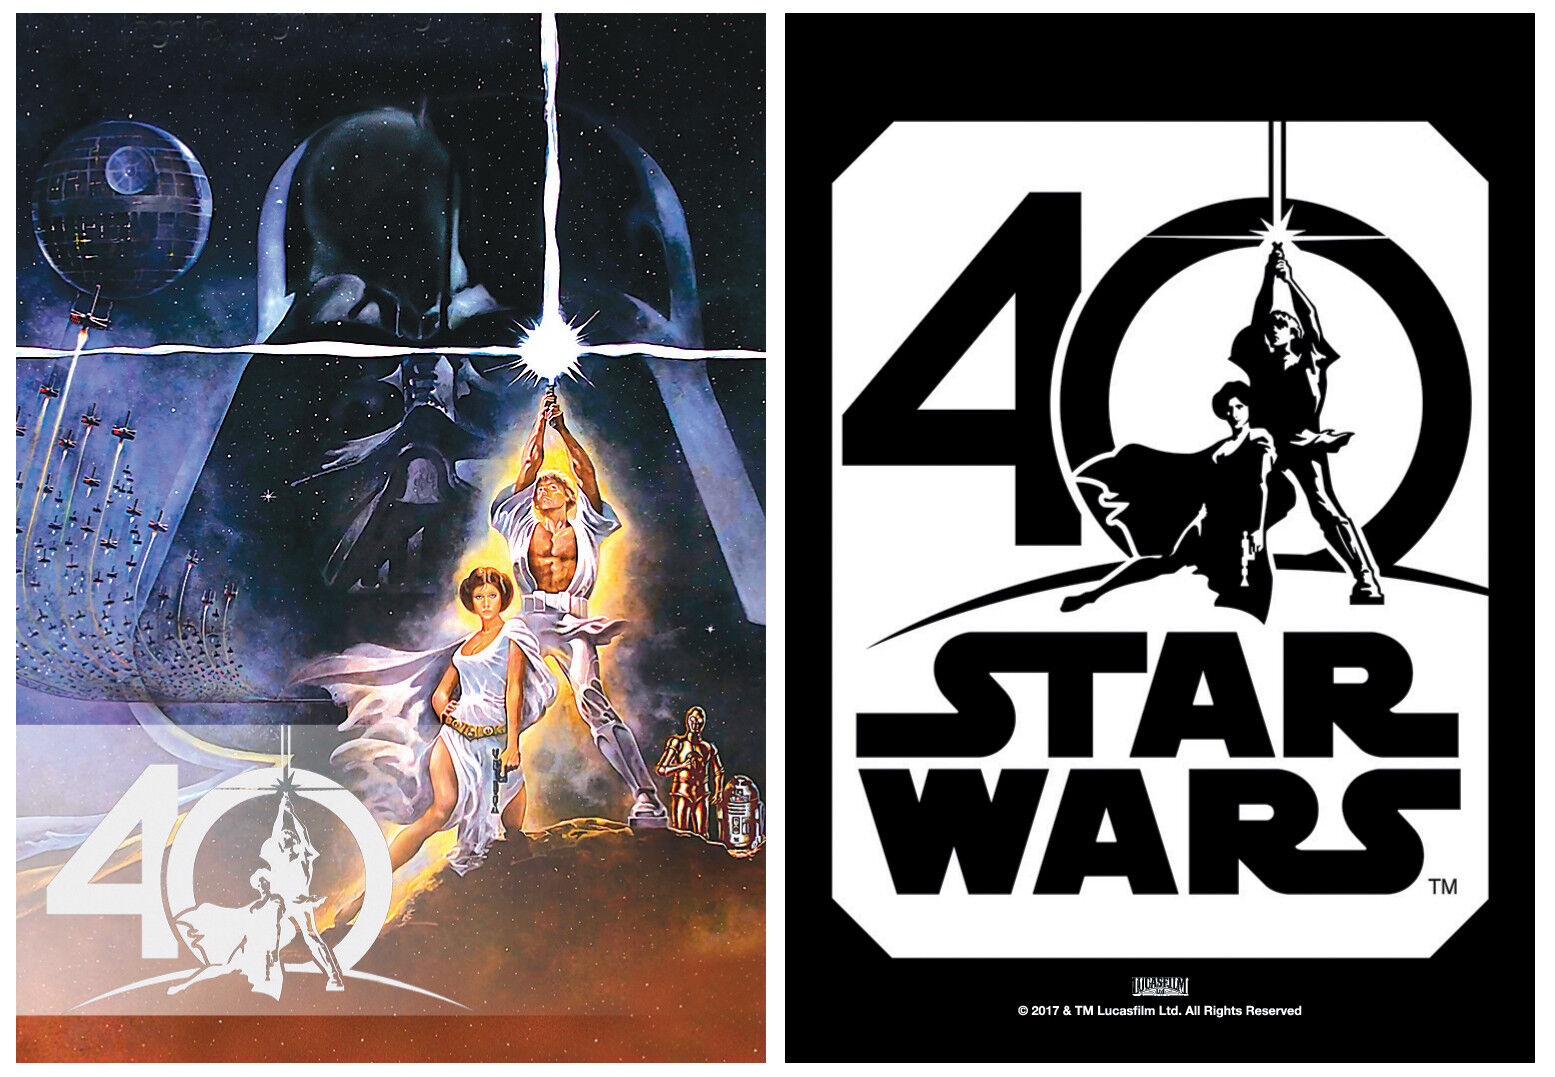 STAR WARS 40th ANNIVERSARY 2017 - Promo Card - Luke Skywalker Princess Leia